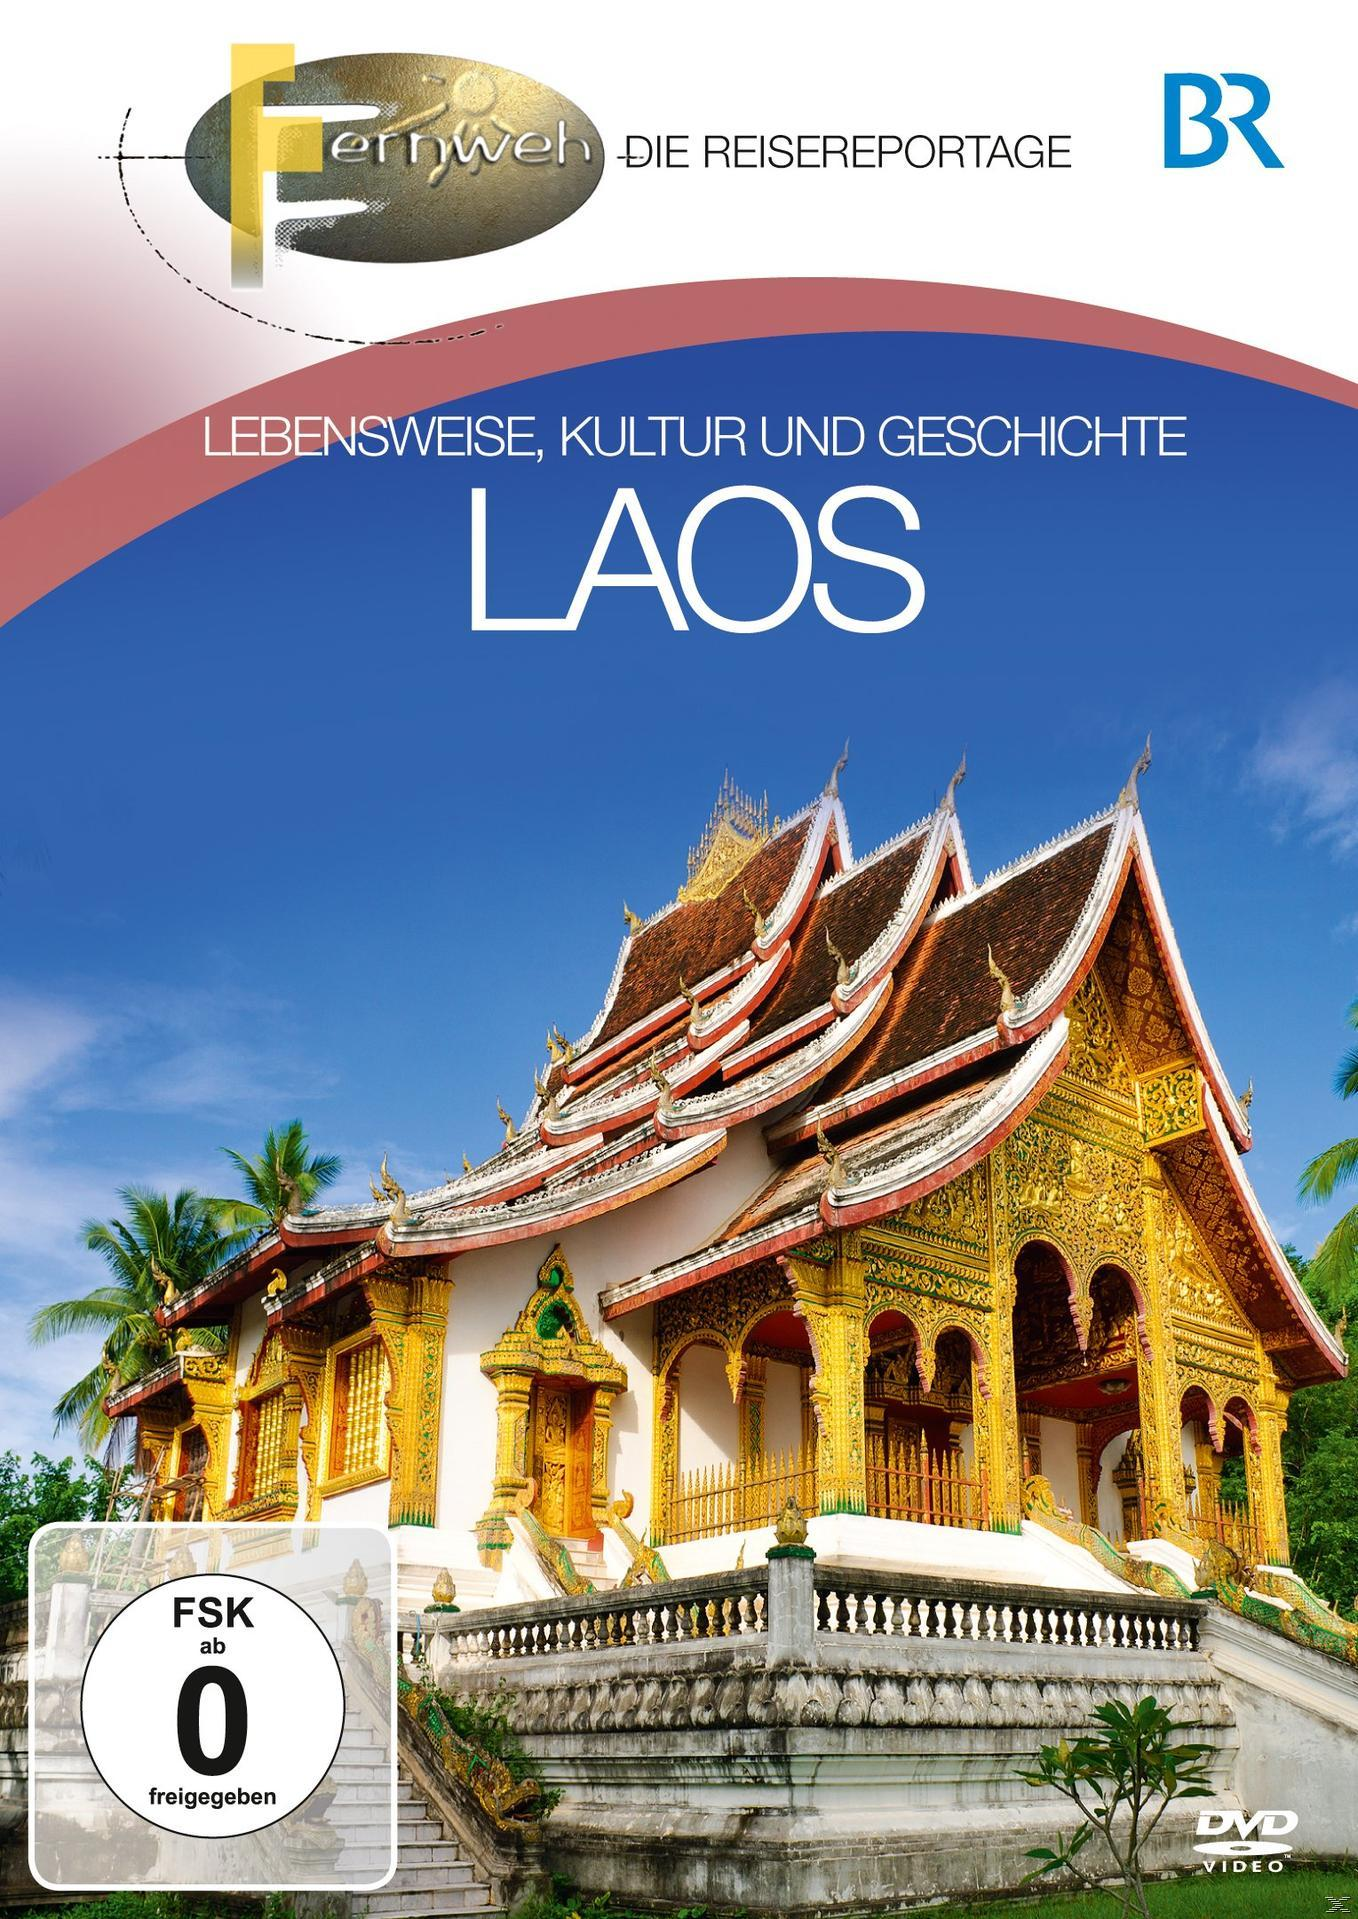 BR-Fernweh: DVD Laos